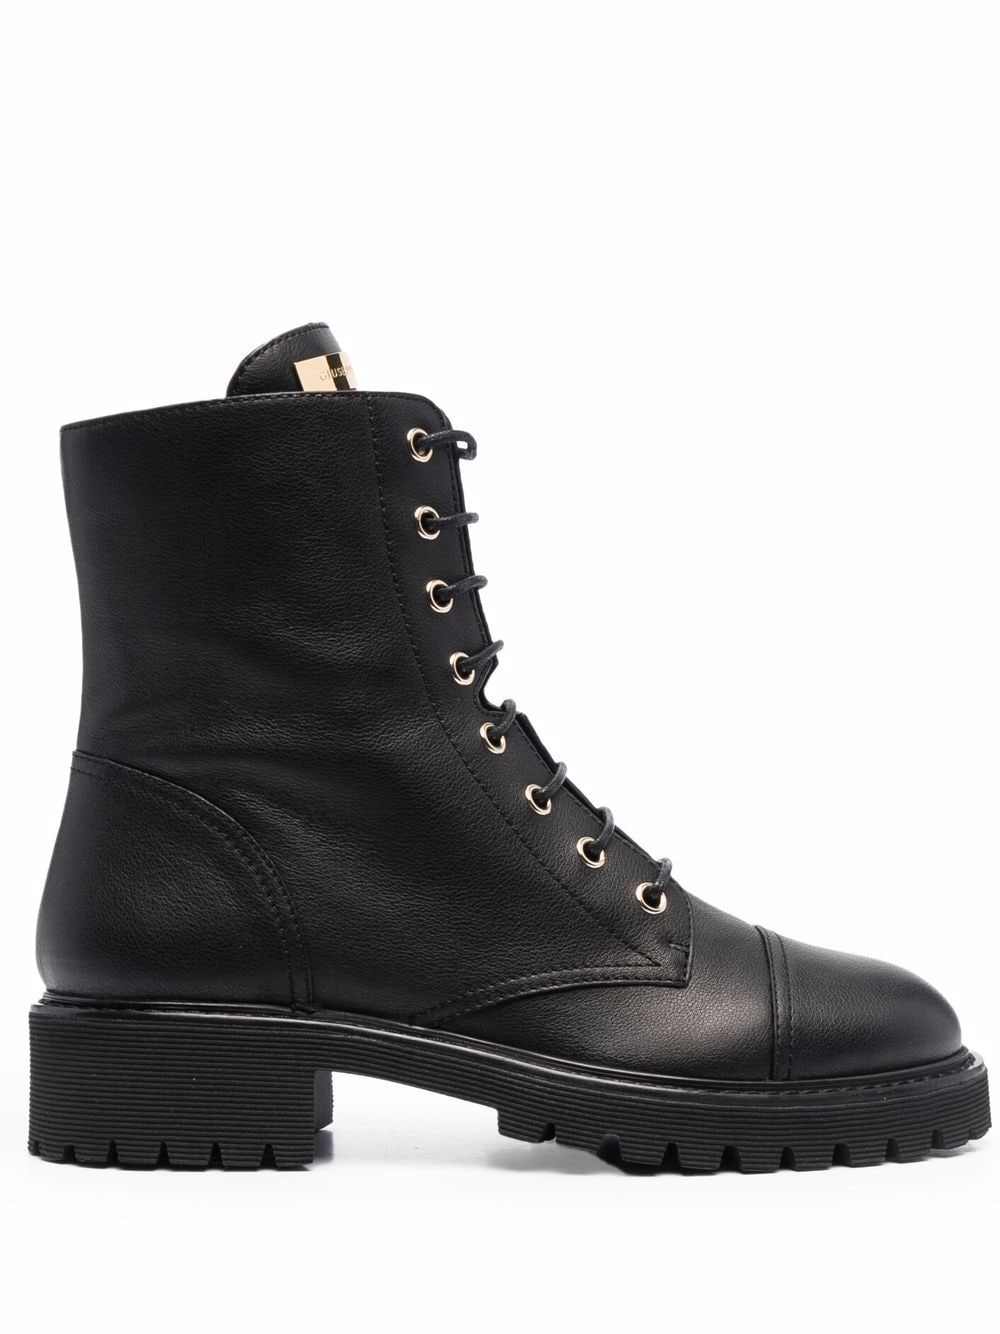 Giuseppe Zanotti Nevada Leather Ankle Boots - Black